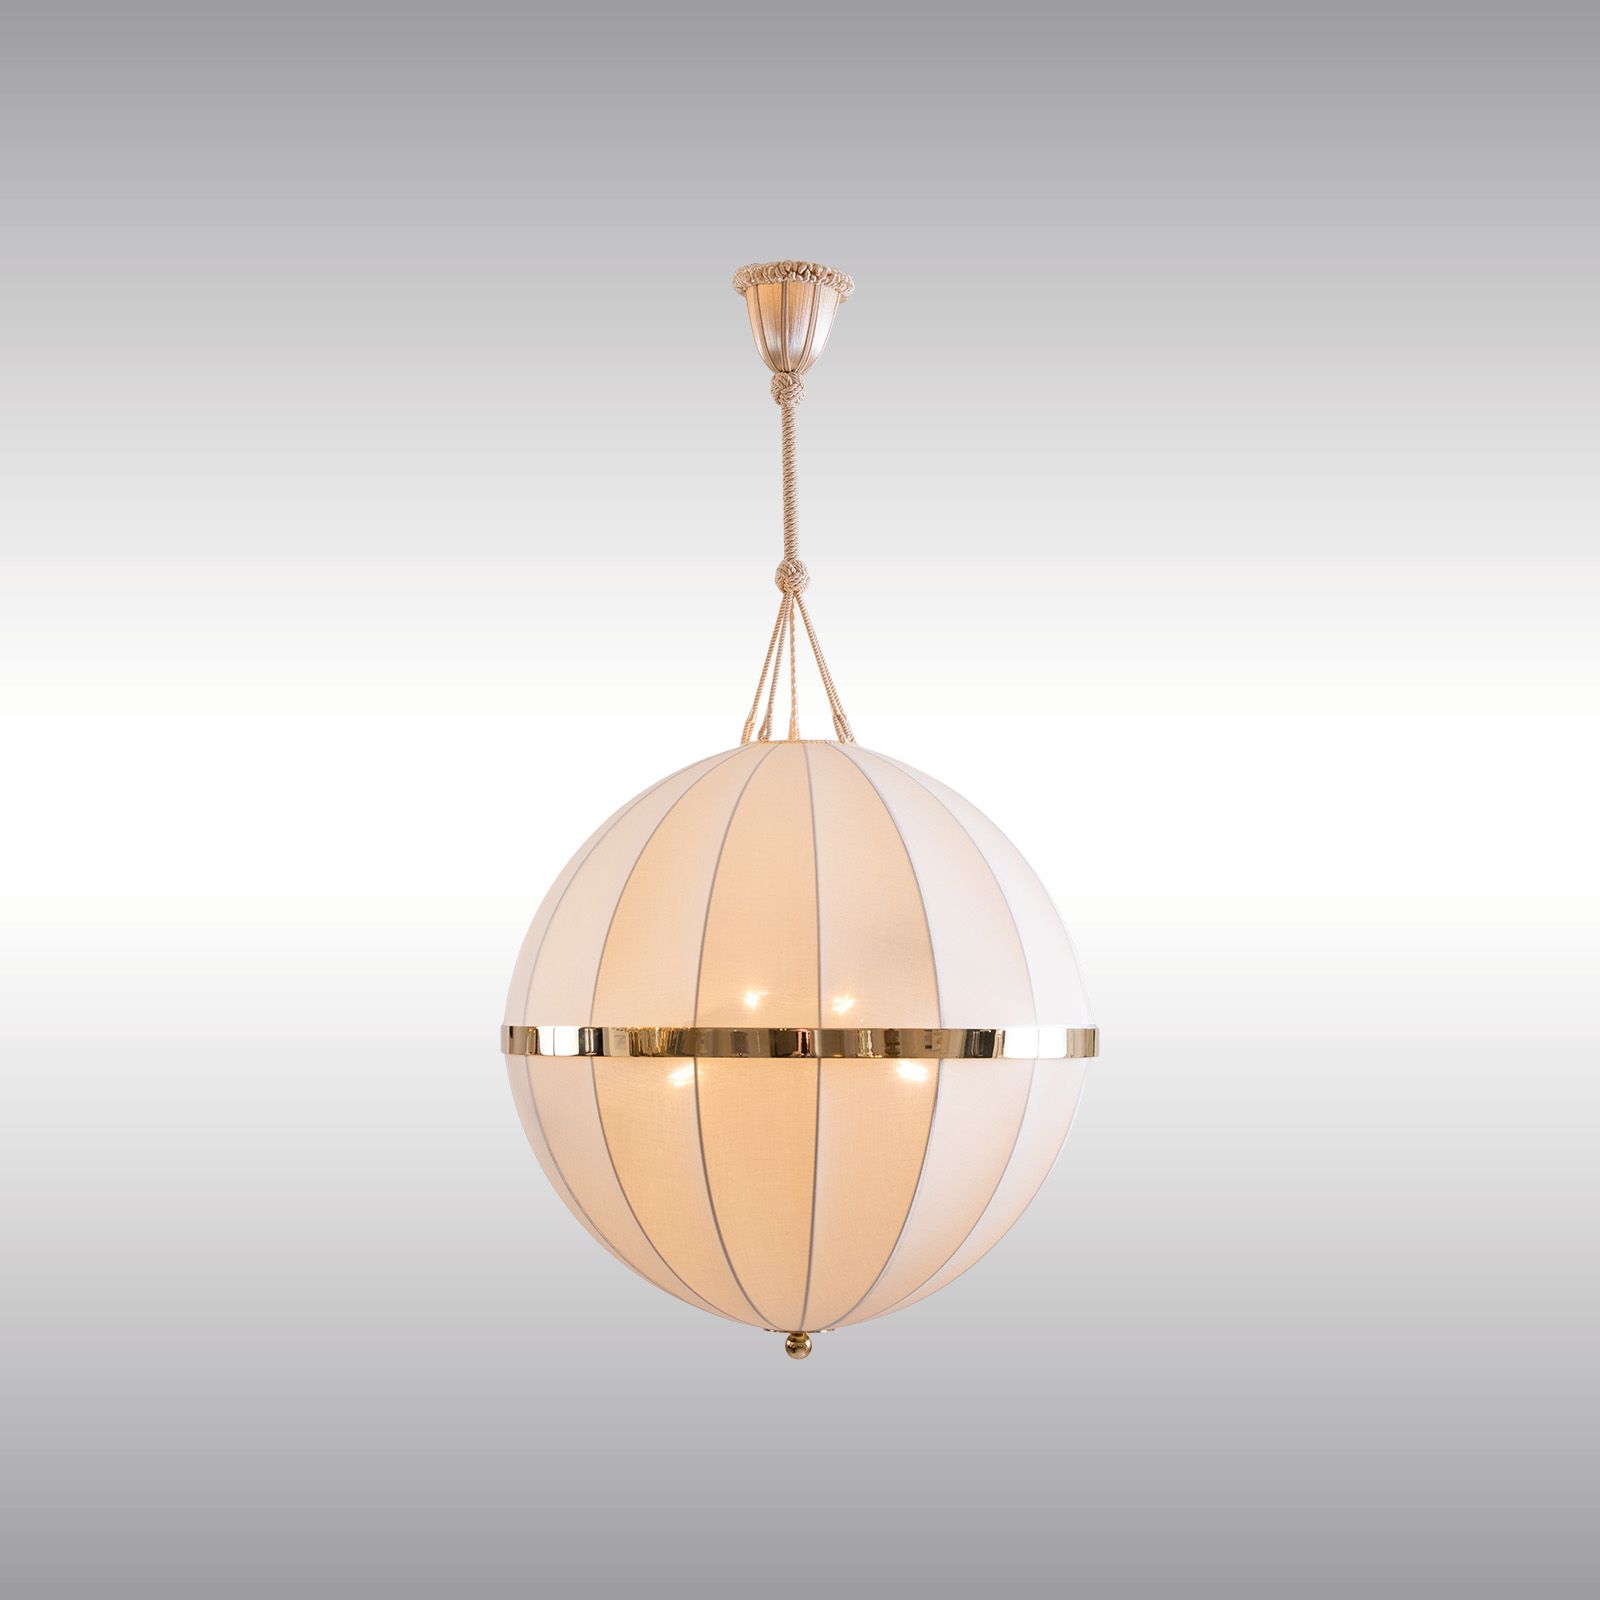 WOKA LAMPS VIENNA - OrderNr.: 22007|Graben Cafe 55 Pure - Design: Josef Hoffmann